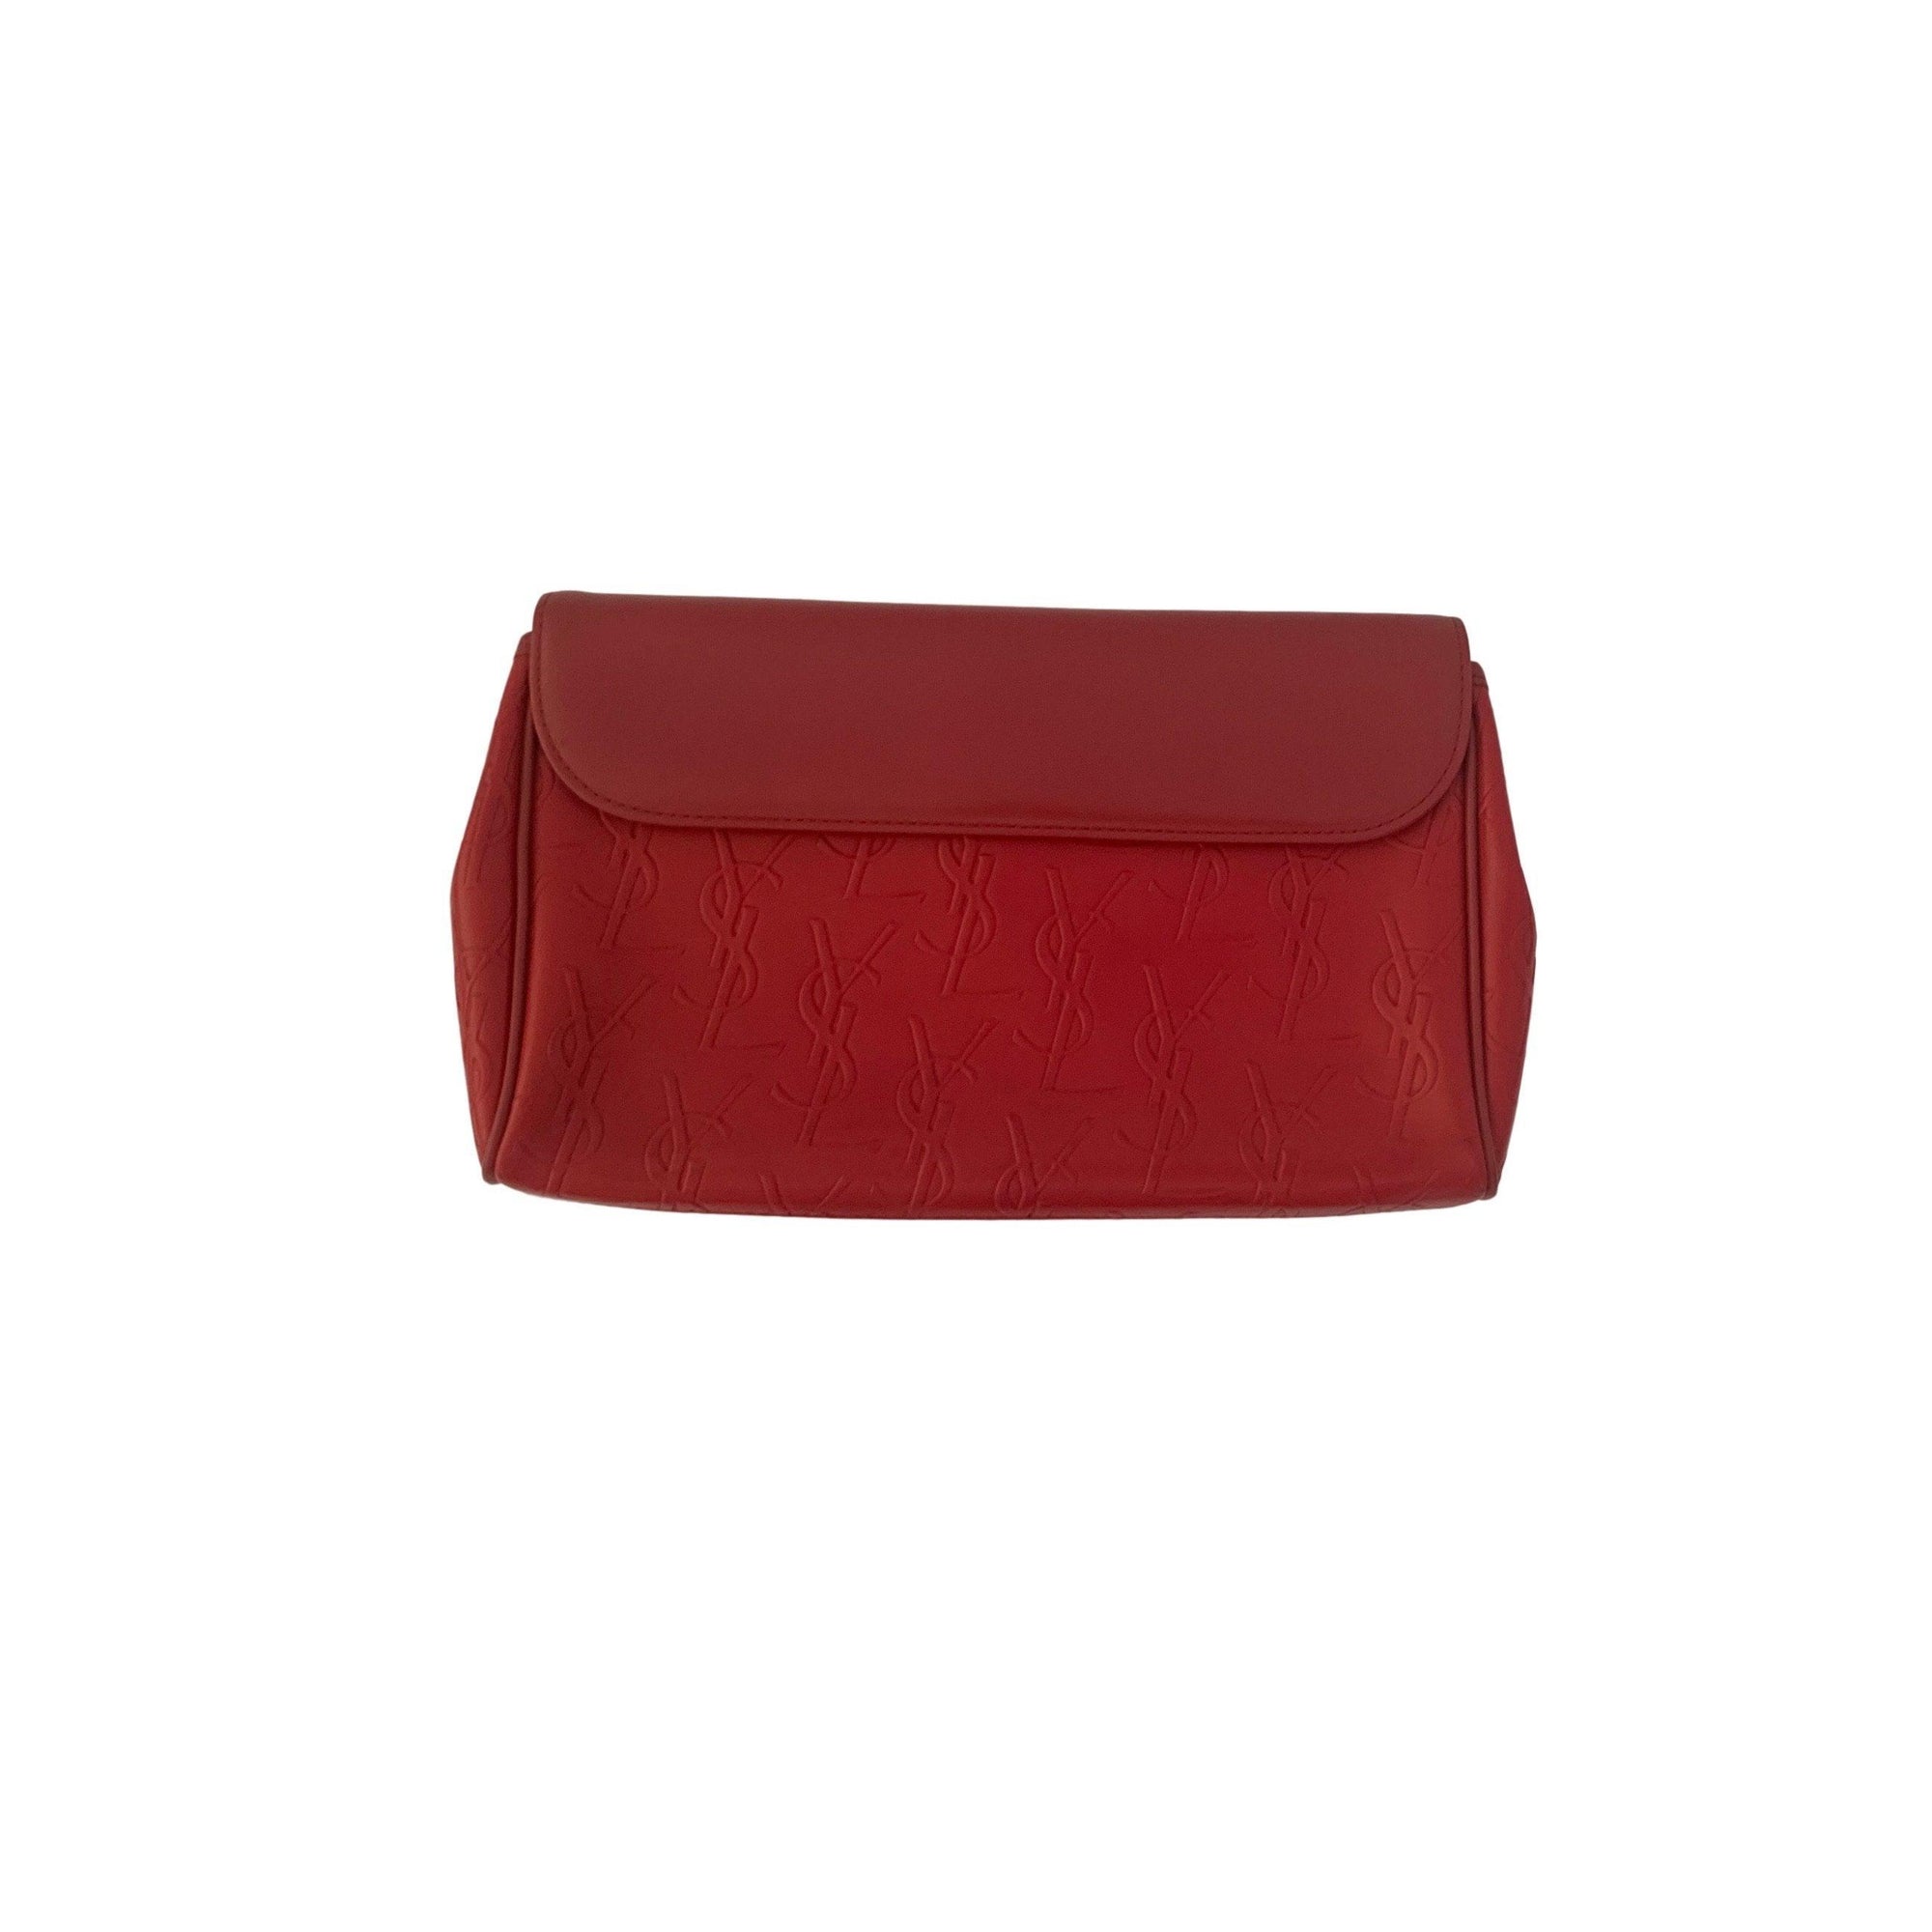 YSL Red Leather Clutch - Handbags